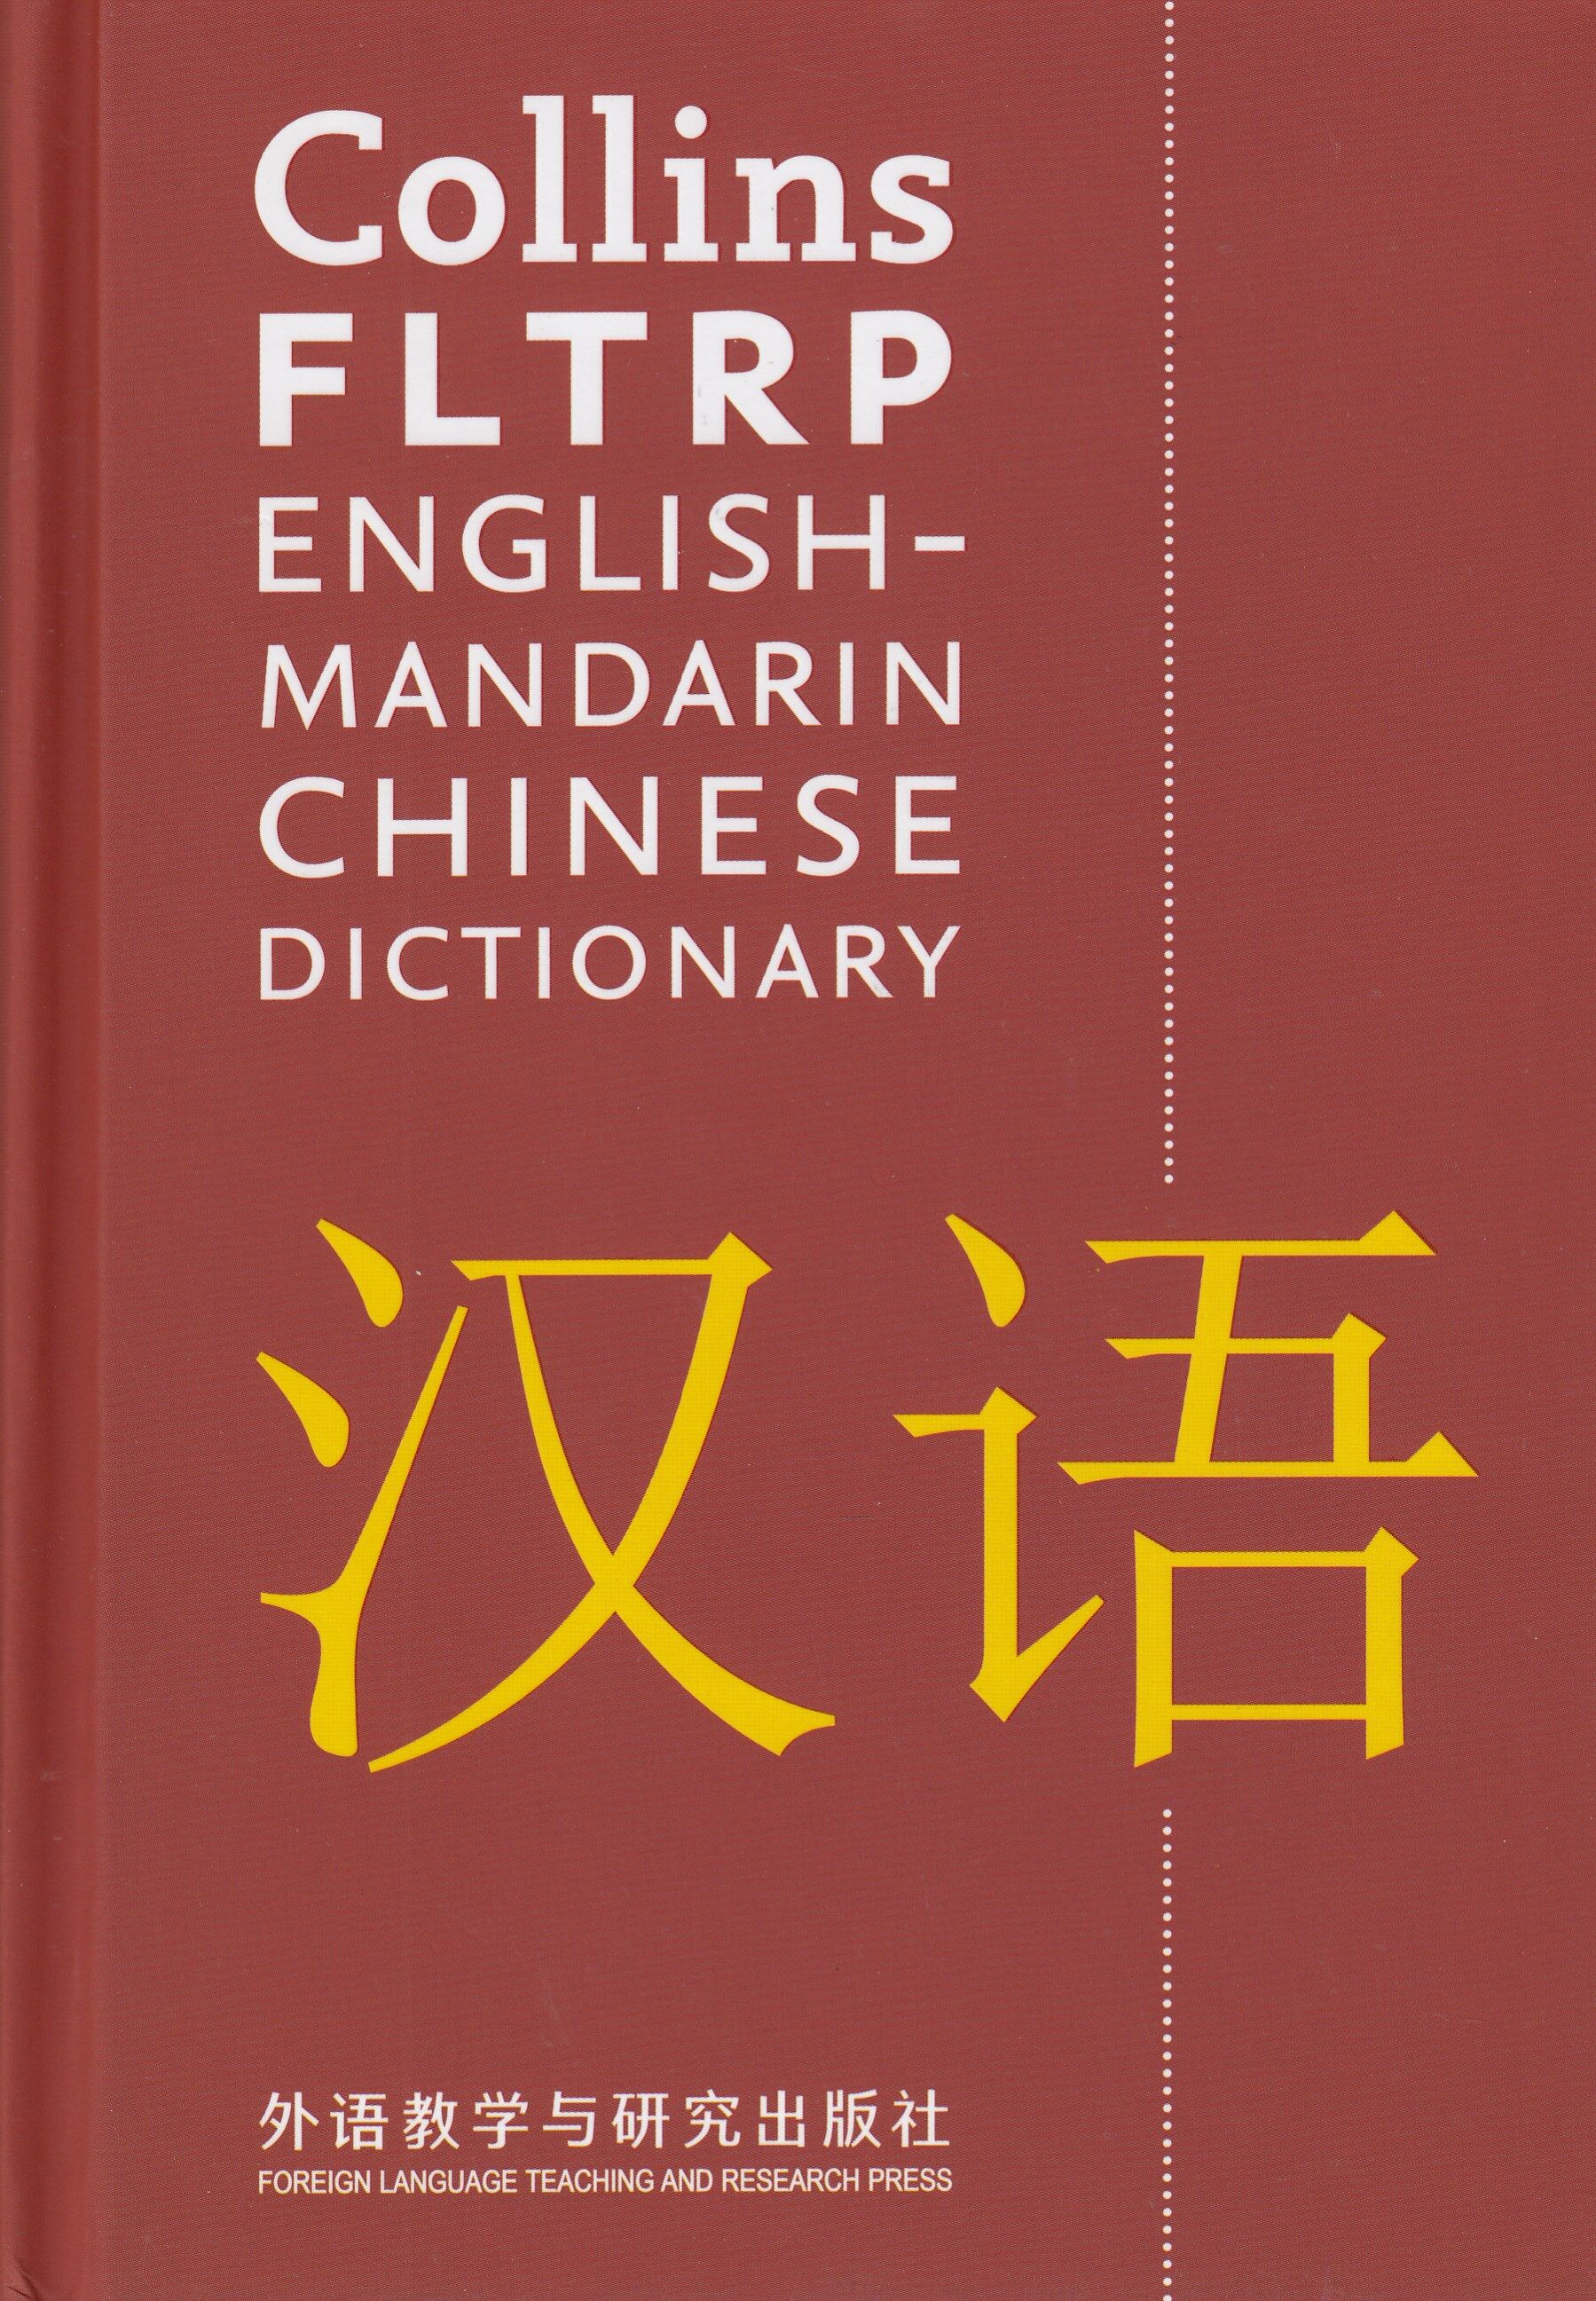 COLLINS FLTRP ENGLISH-MANDARIN CHINESE DICTIONARY